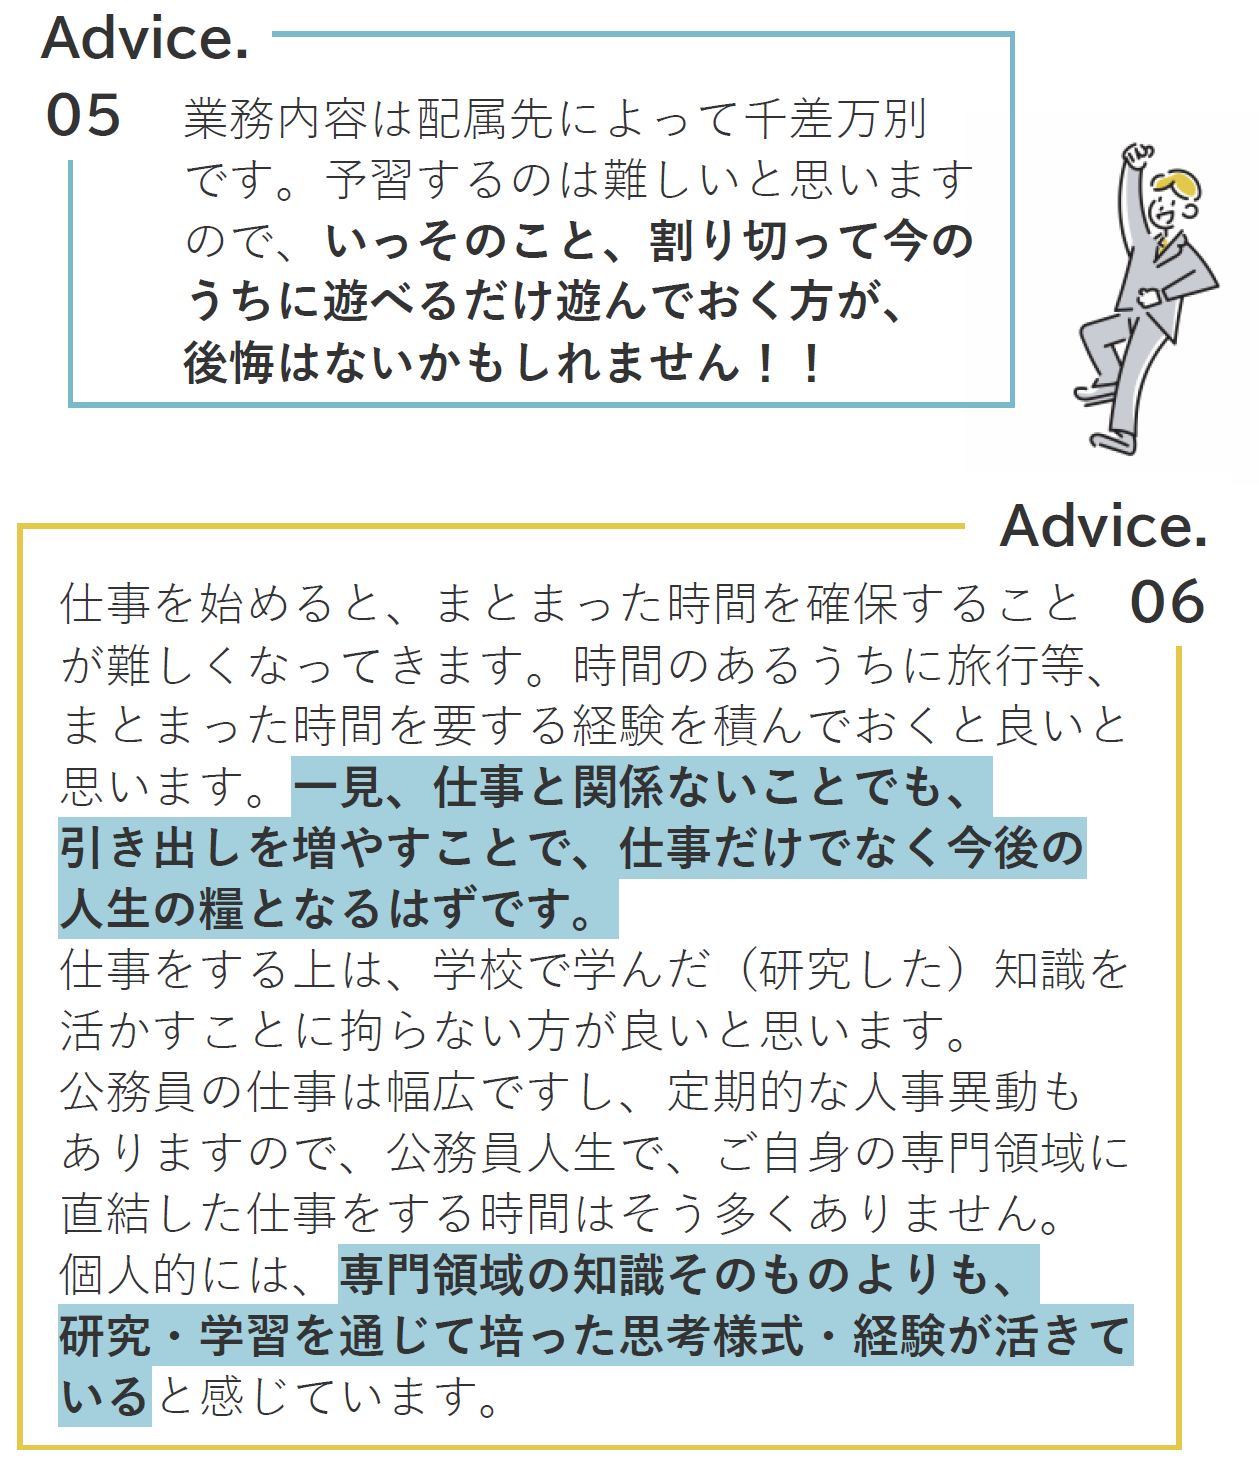 advice-03